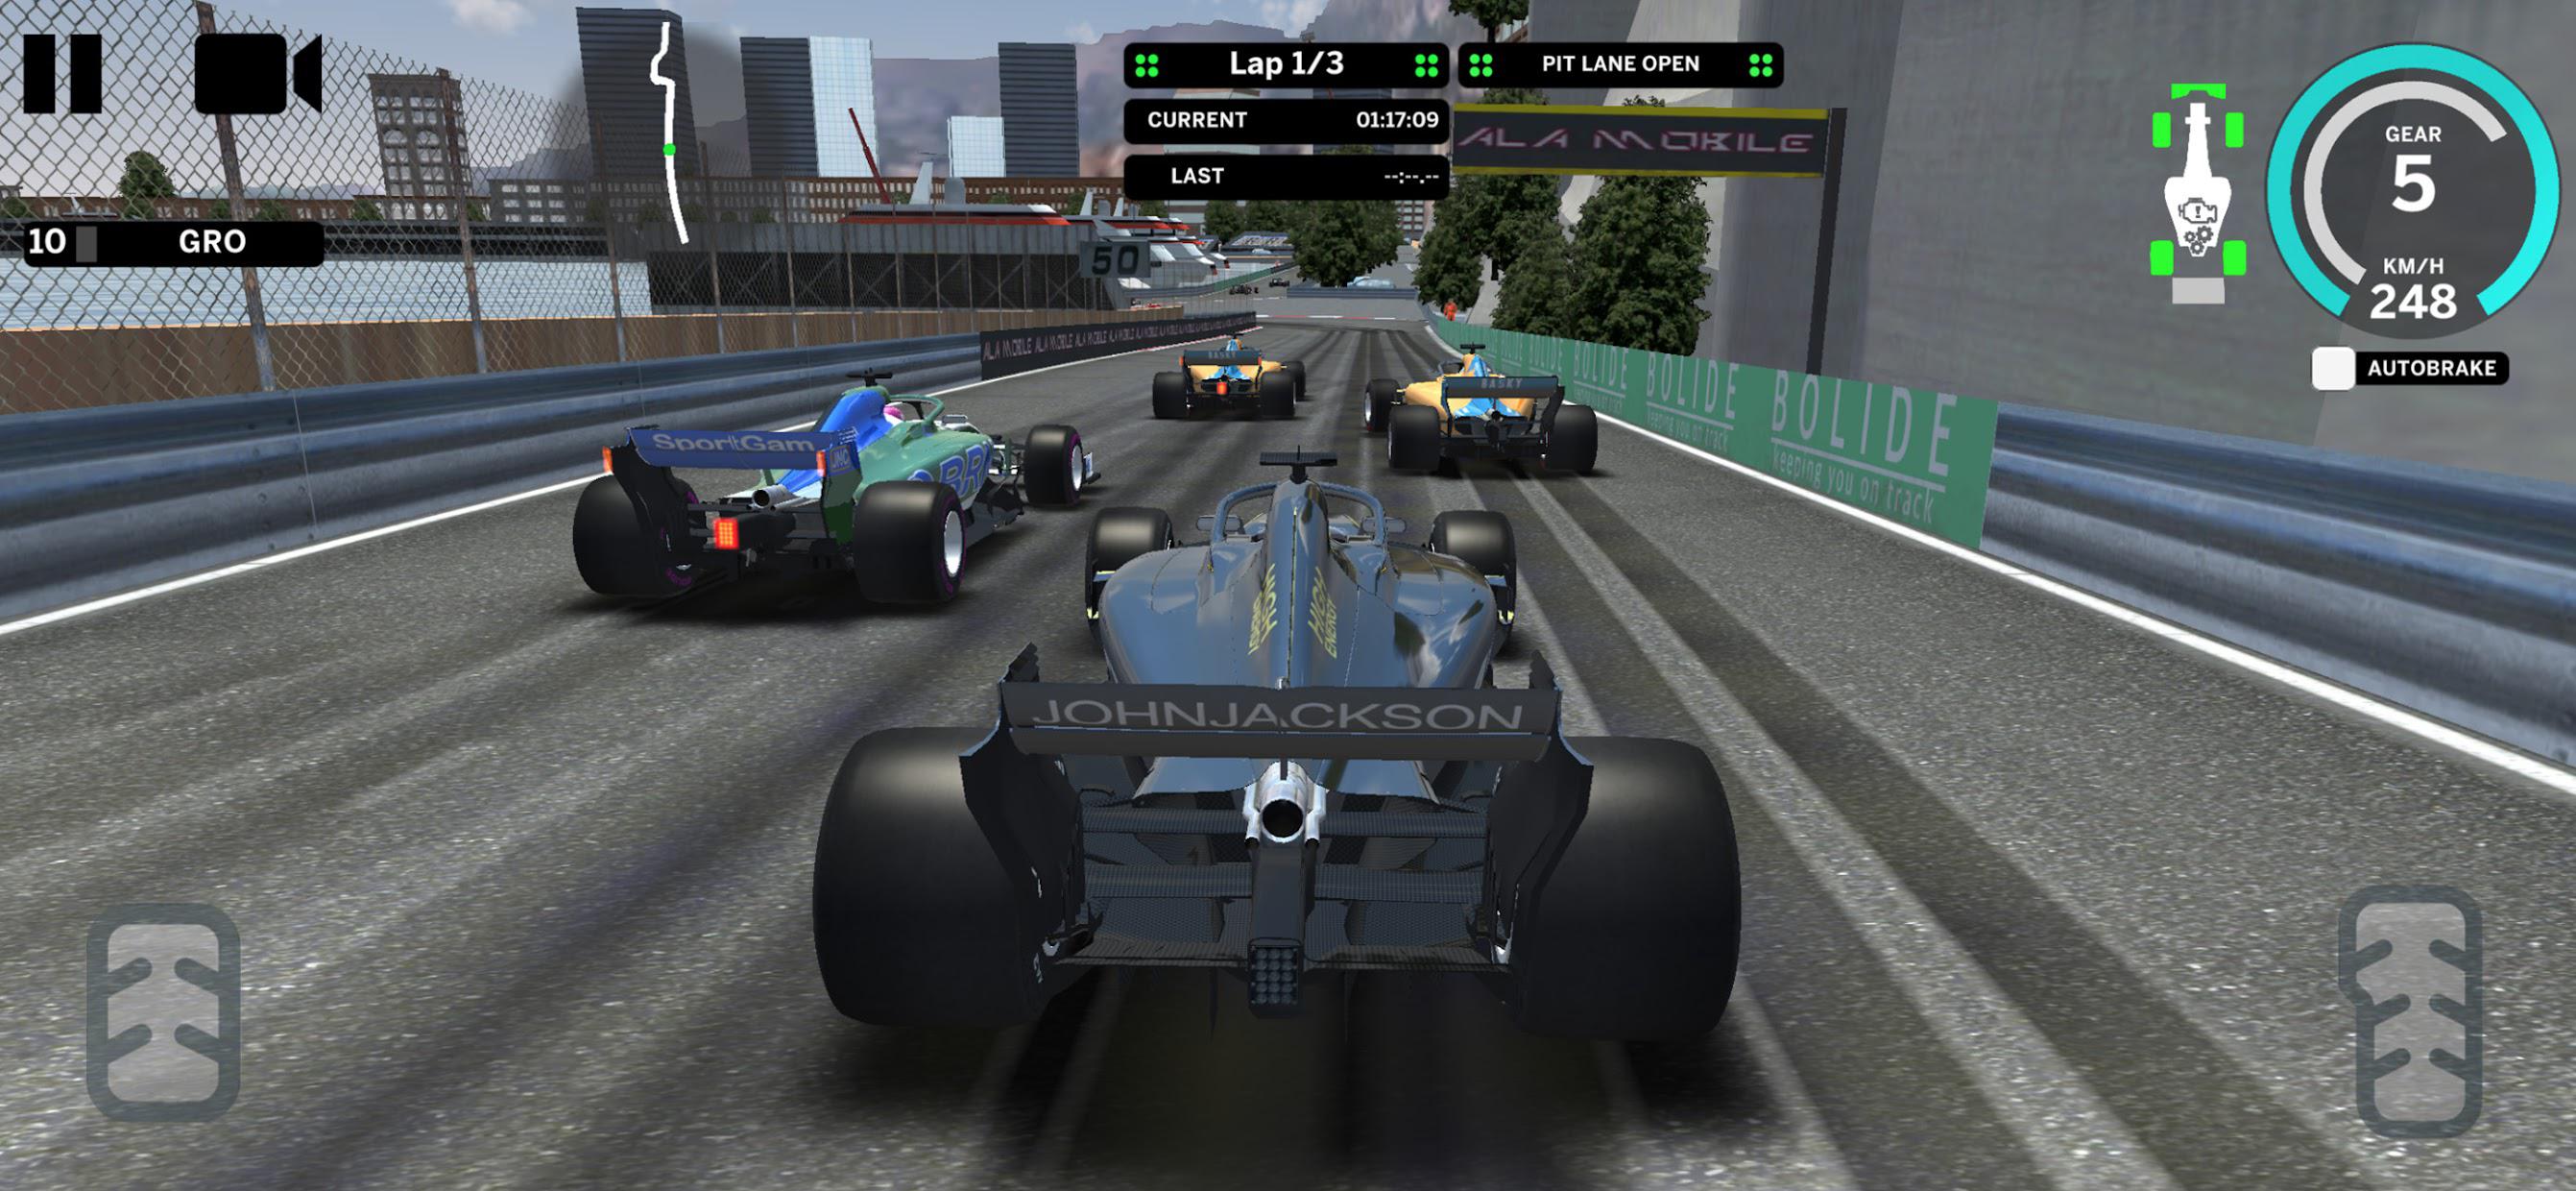 Ala Mobile GP - Formula cars racing_游戏简介_图4